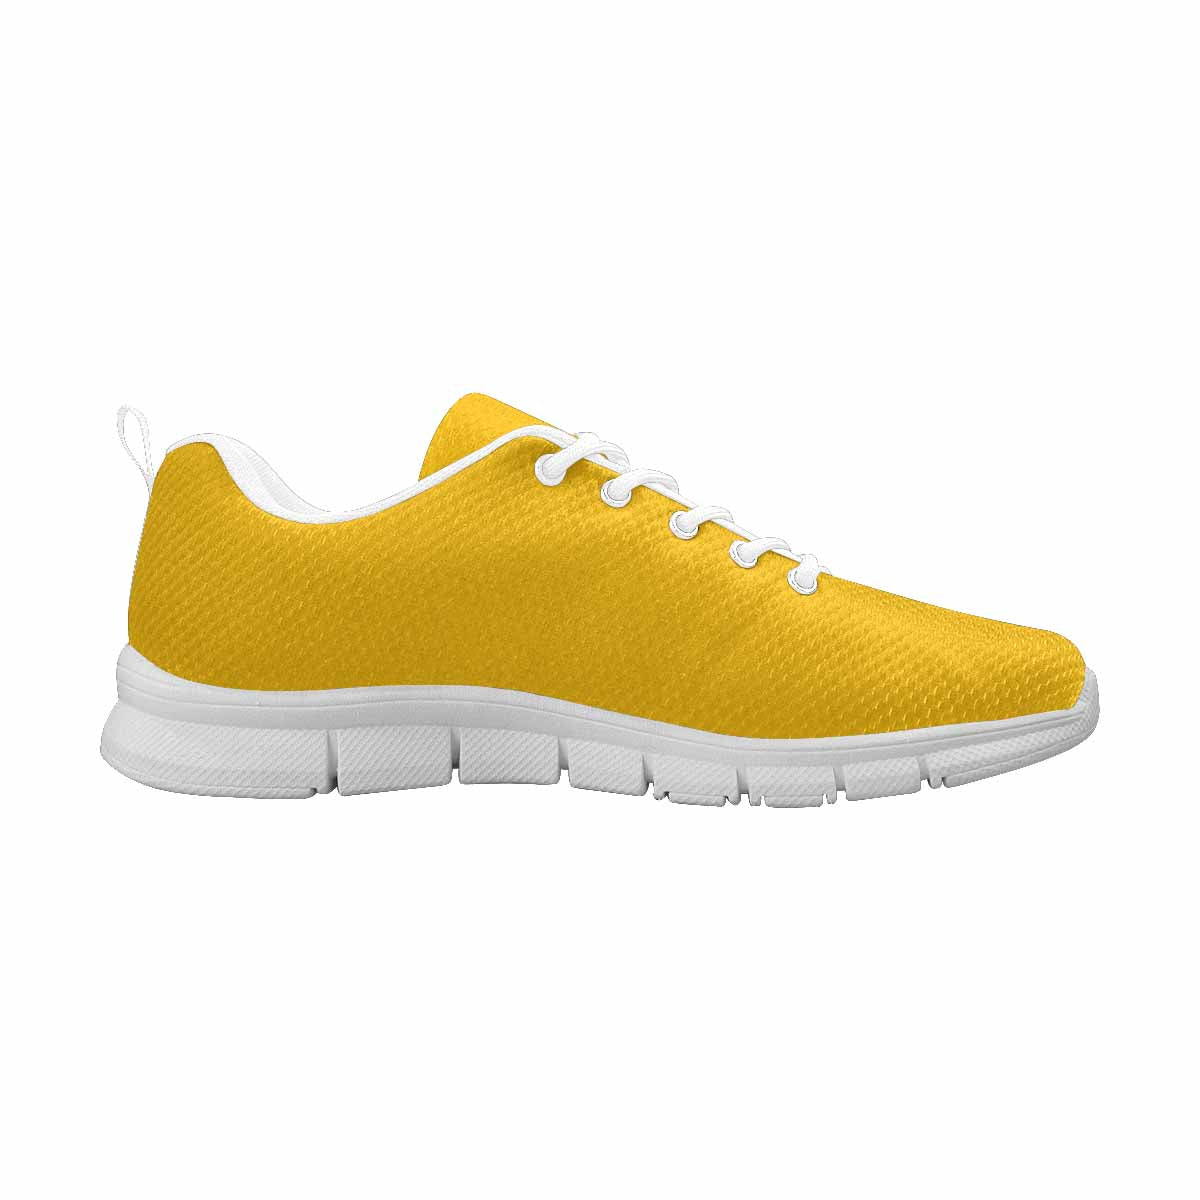 Sneakers For Men,    Amber Orange   - Running Shoes